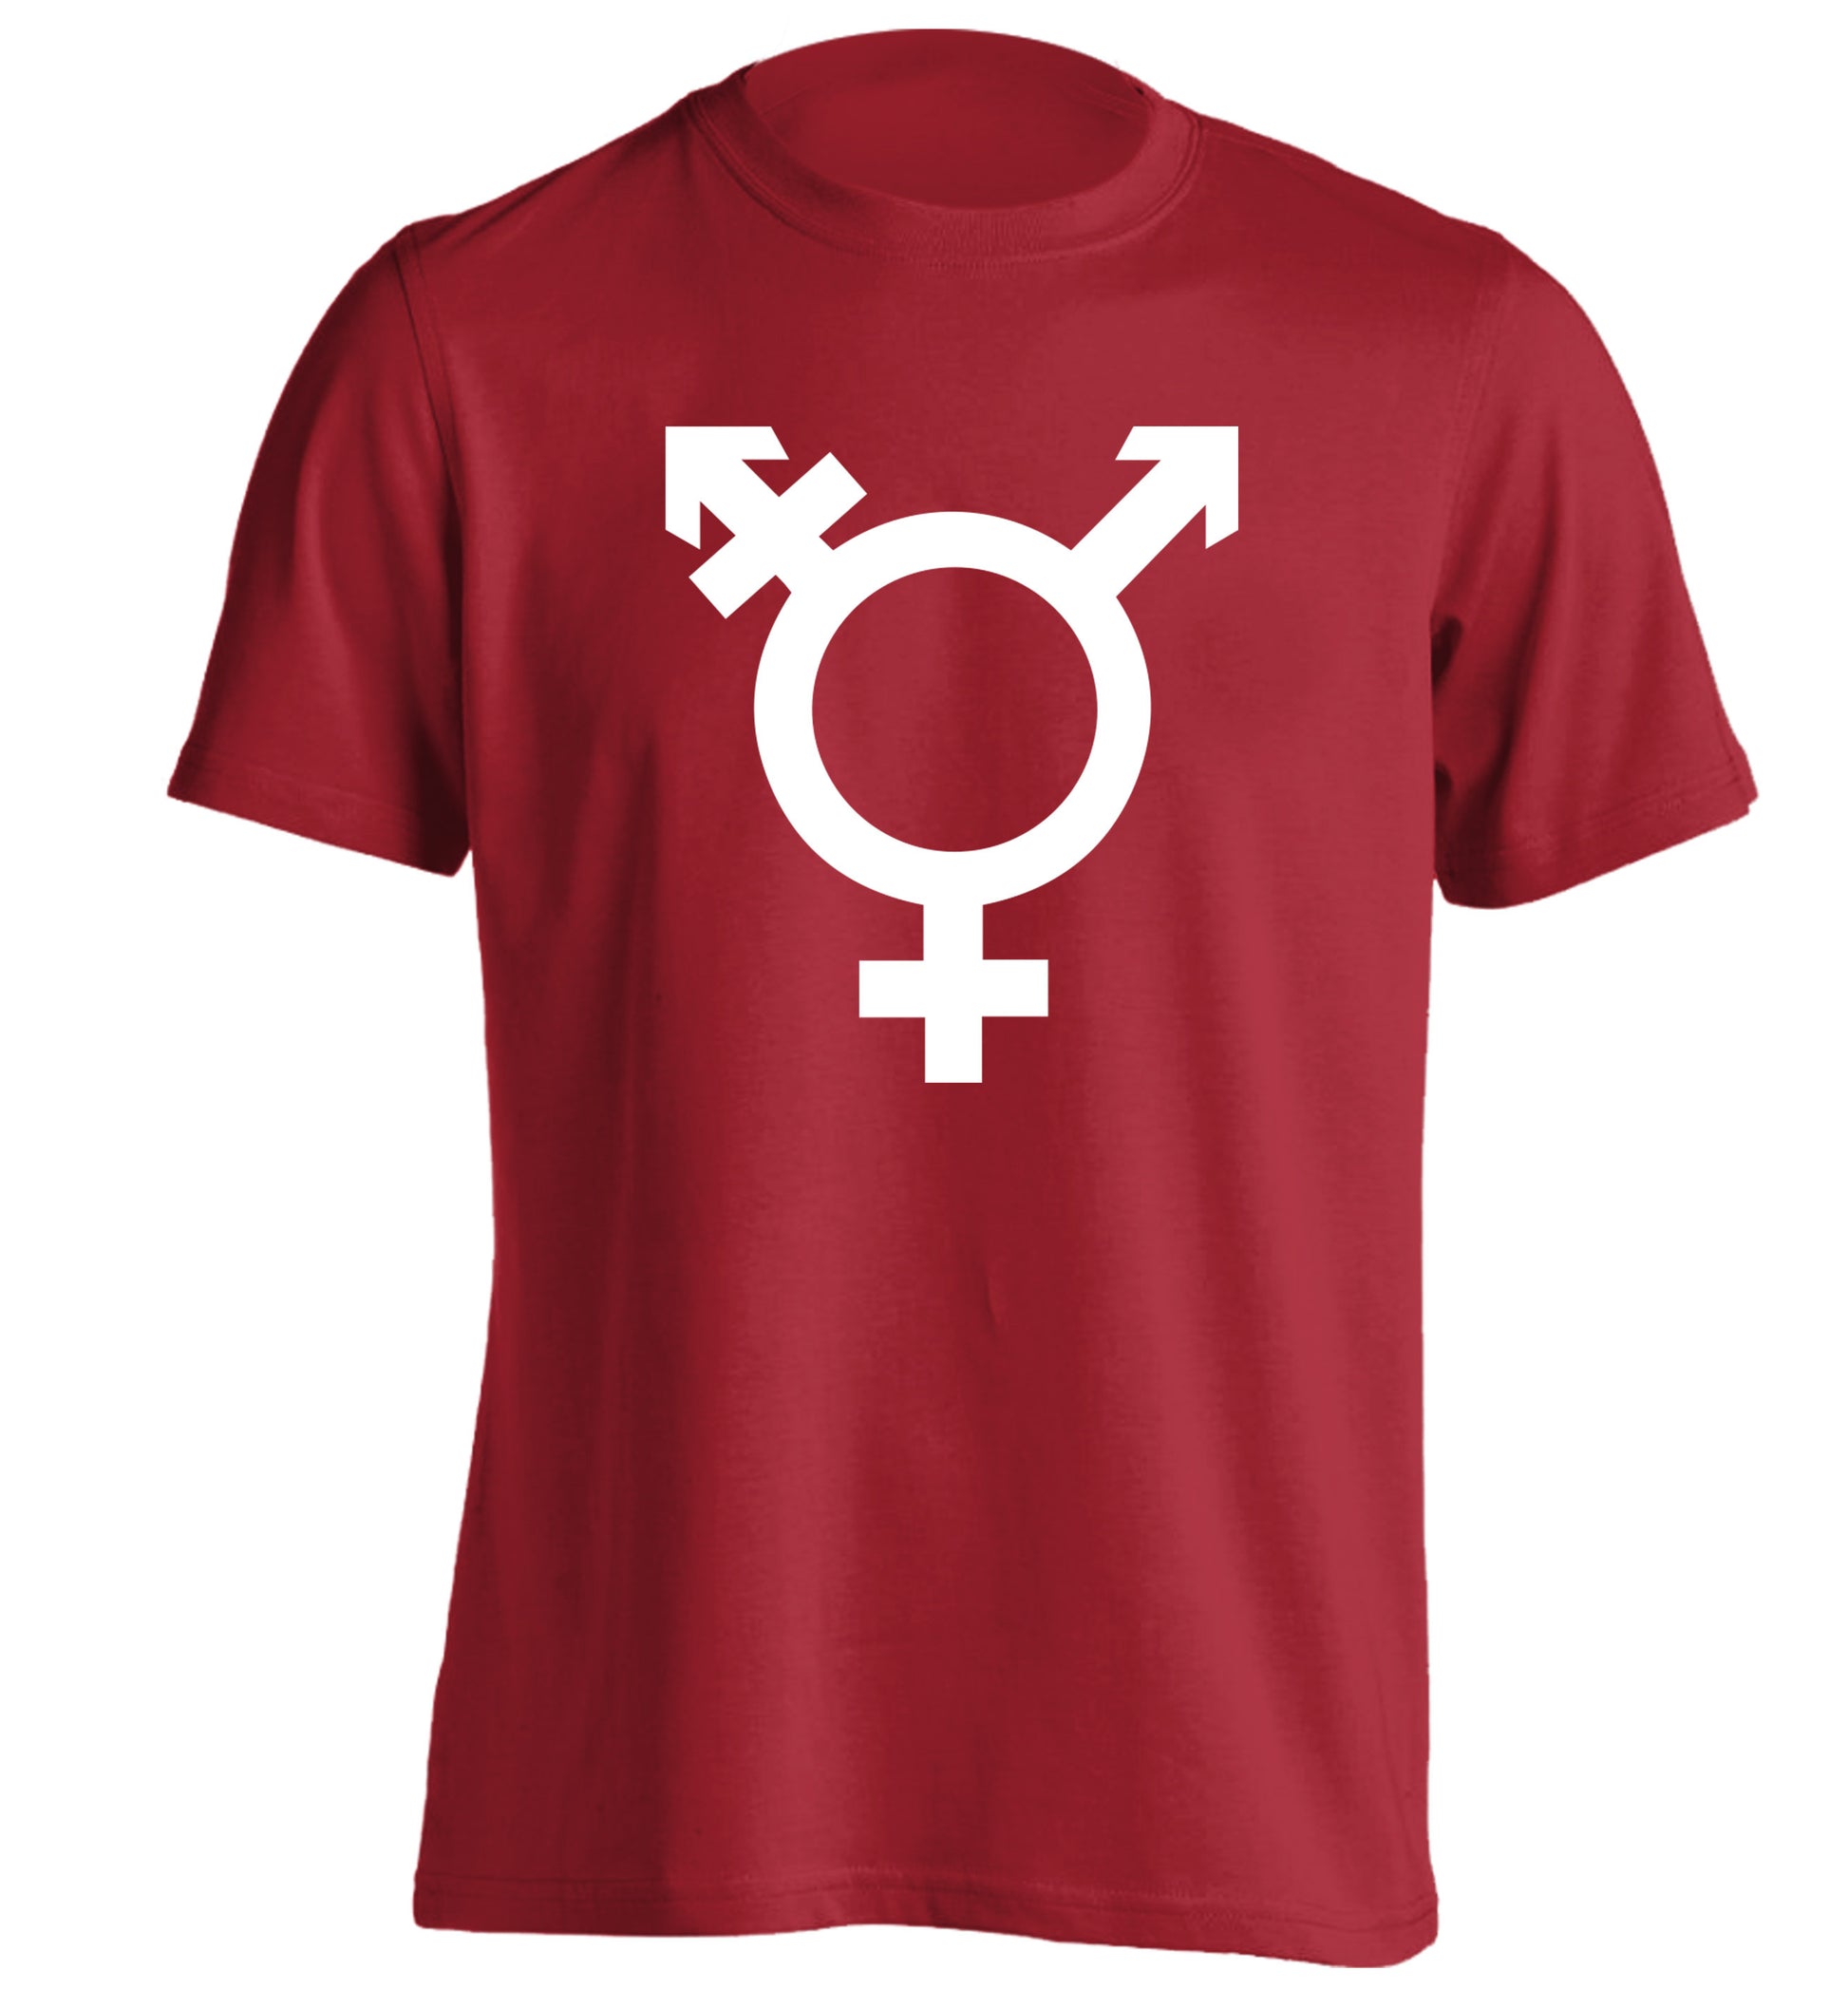 Gender neutral symbol large adults unisex red Tshirt 2XL